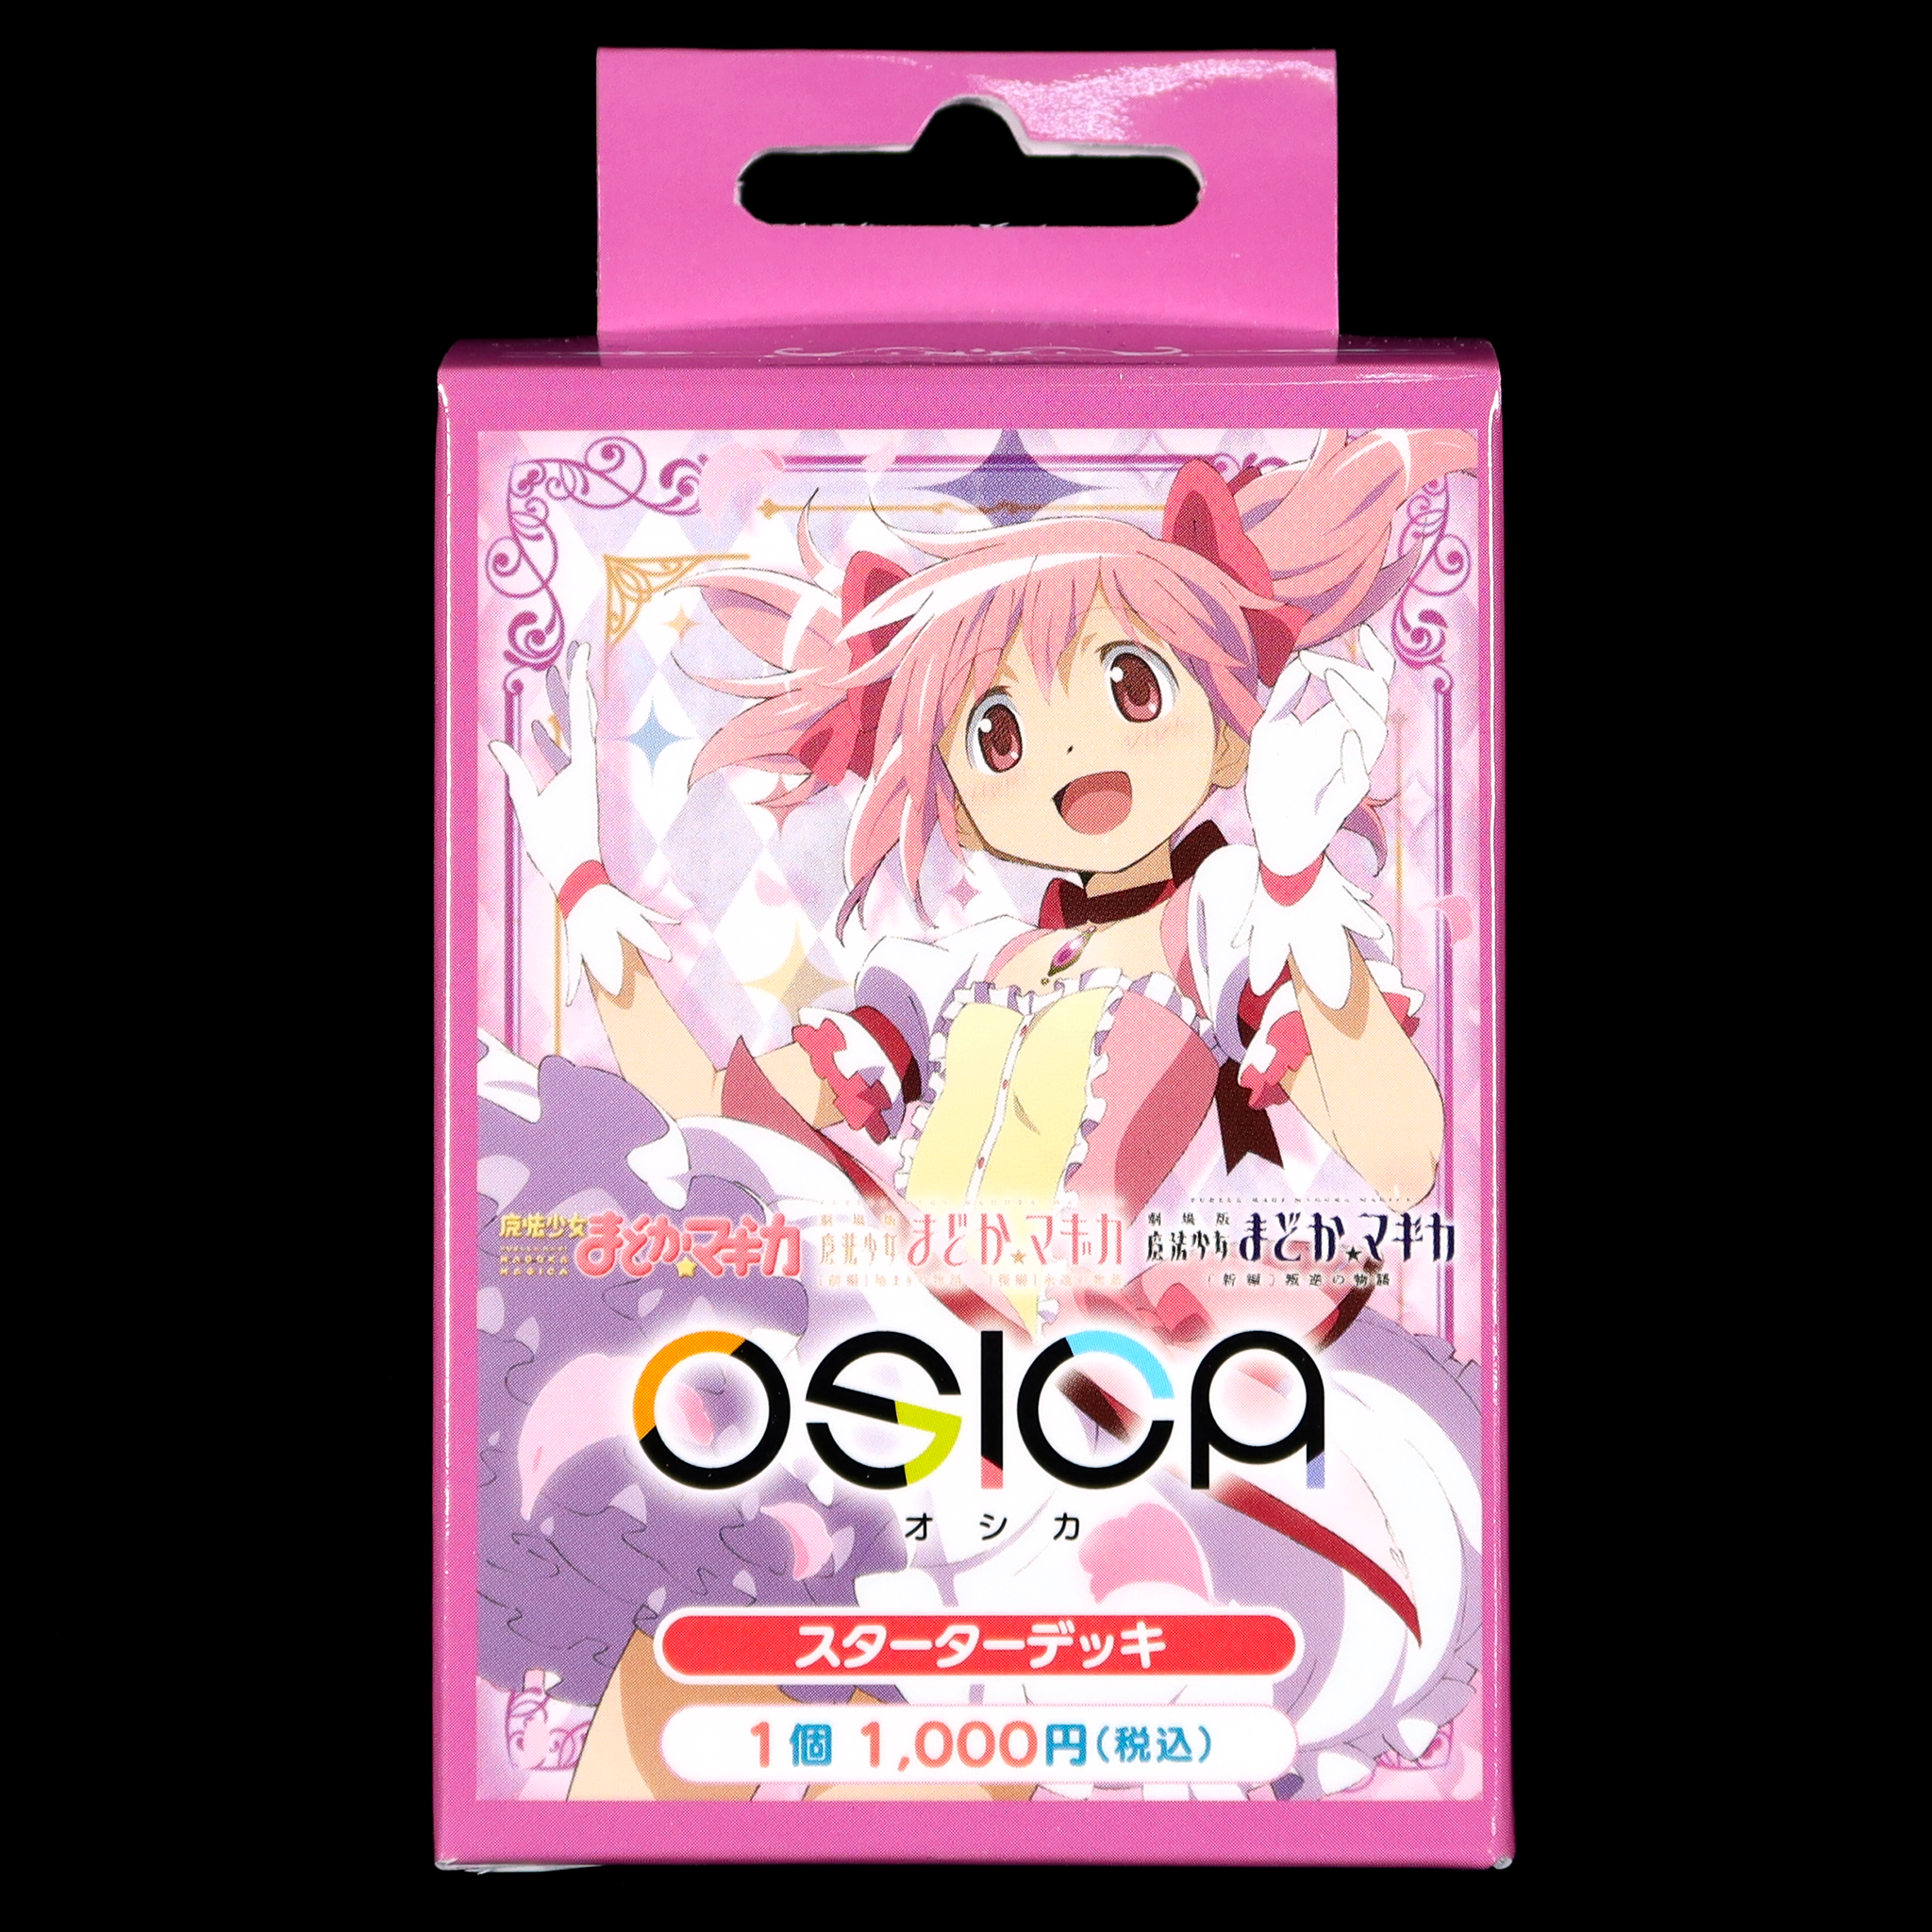 OSICA Starter Deck ｢Magical Girl Madoka ☆ Magica｣ Series